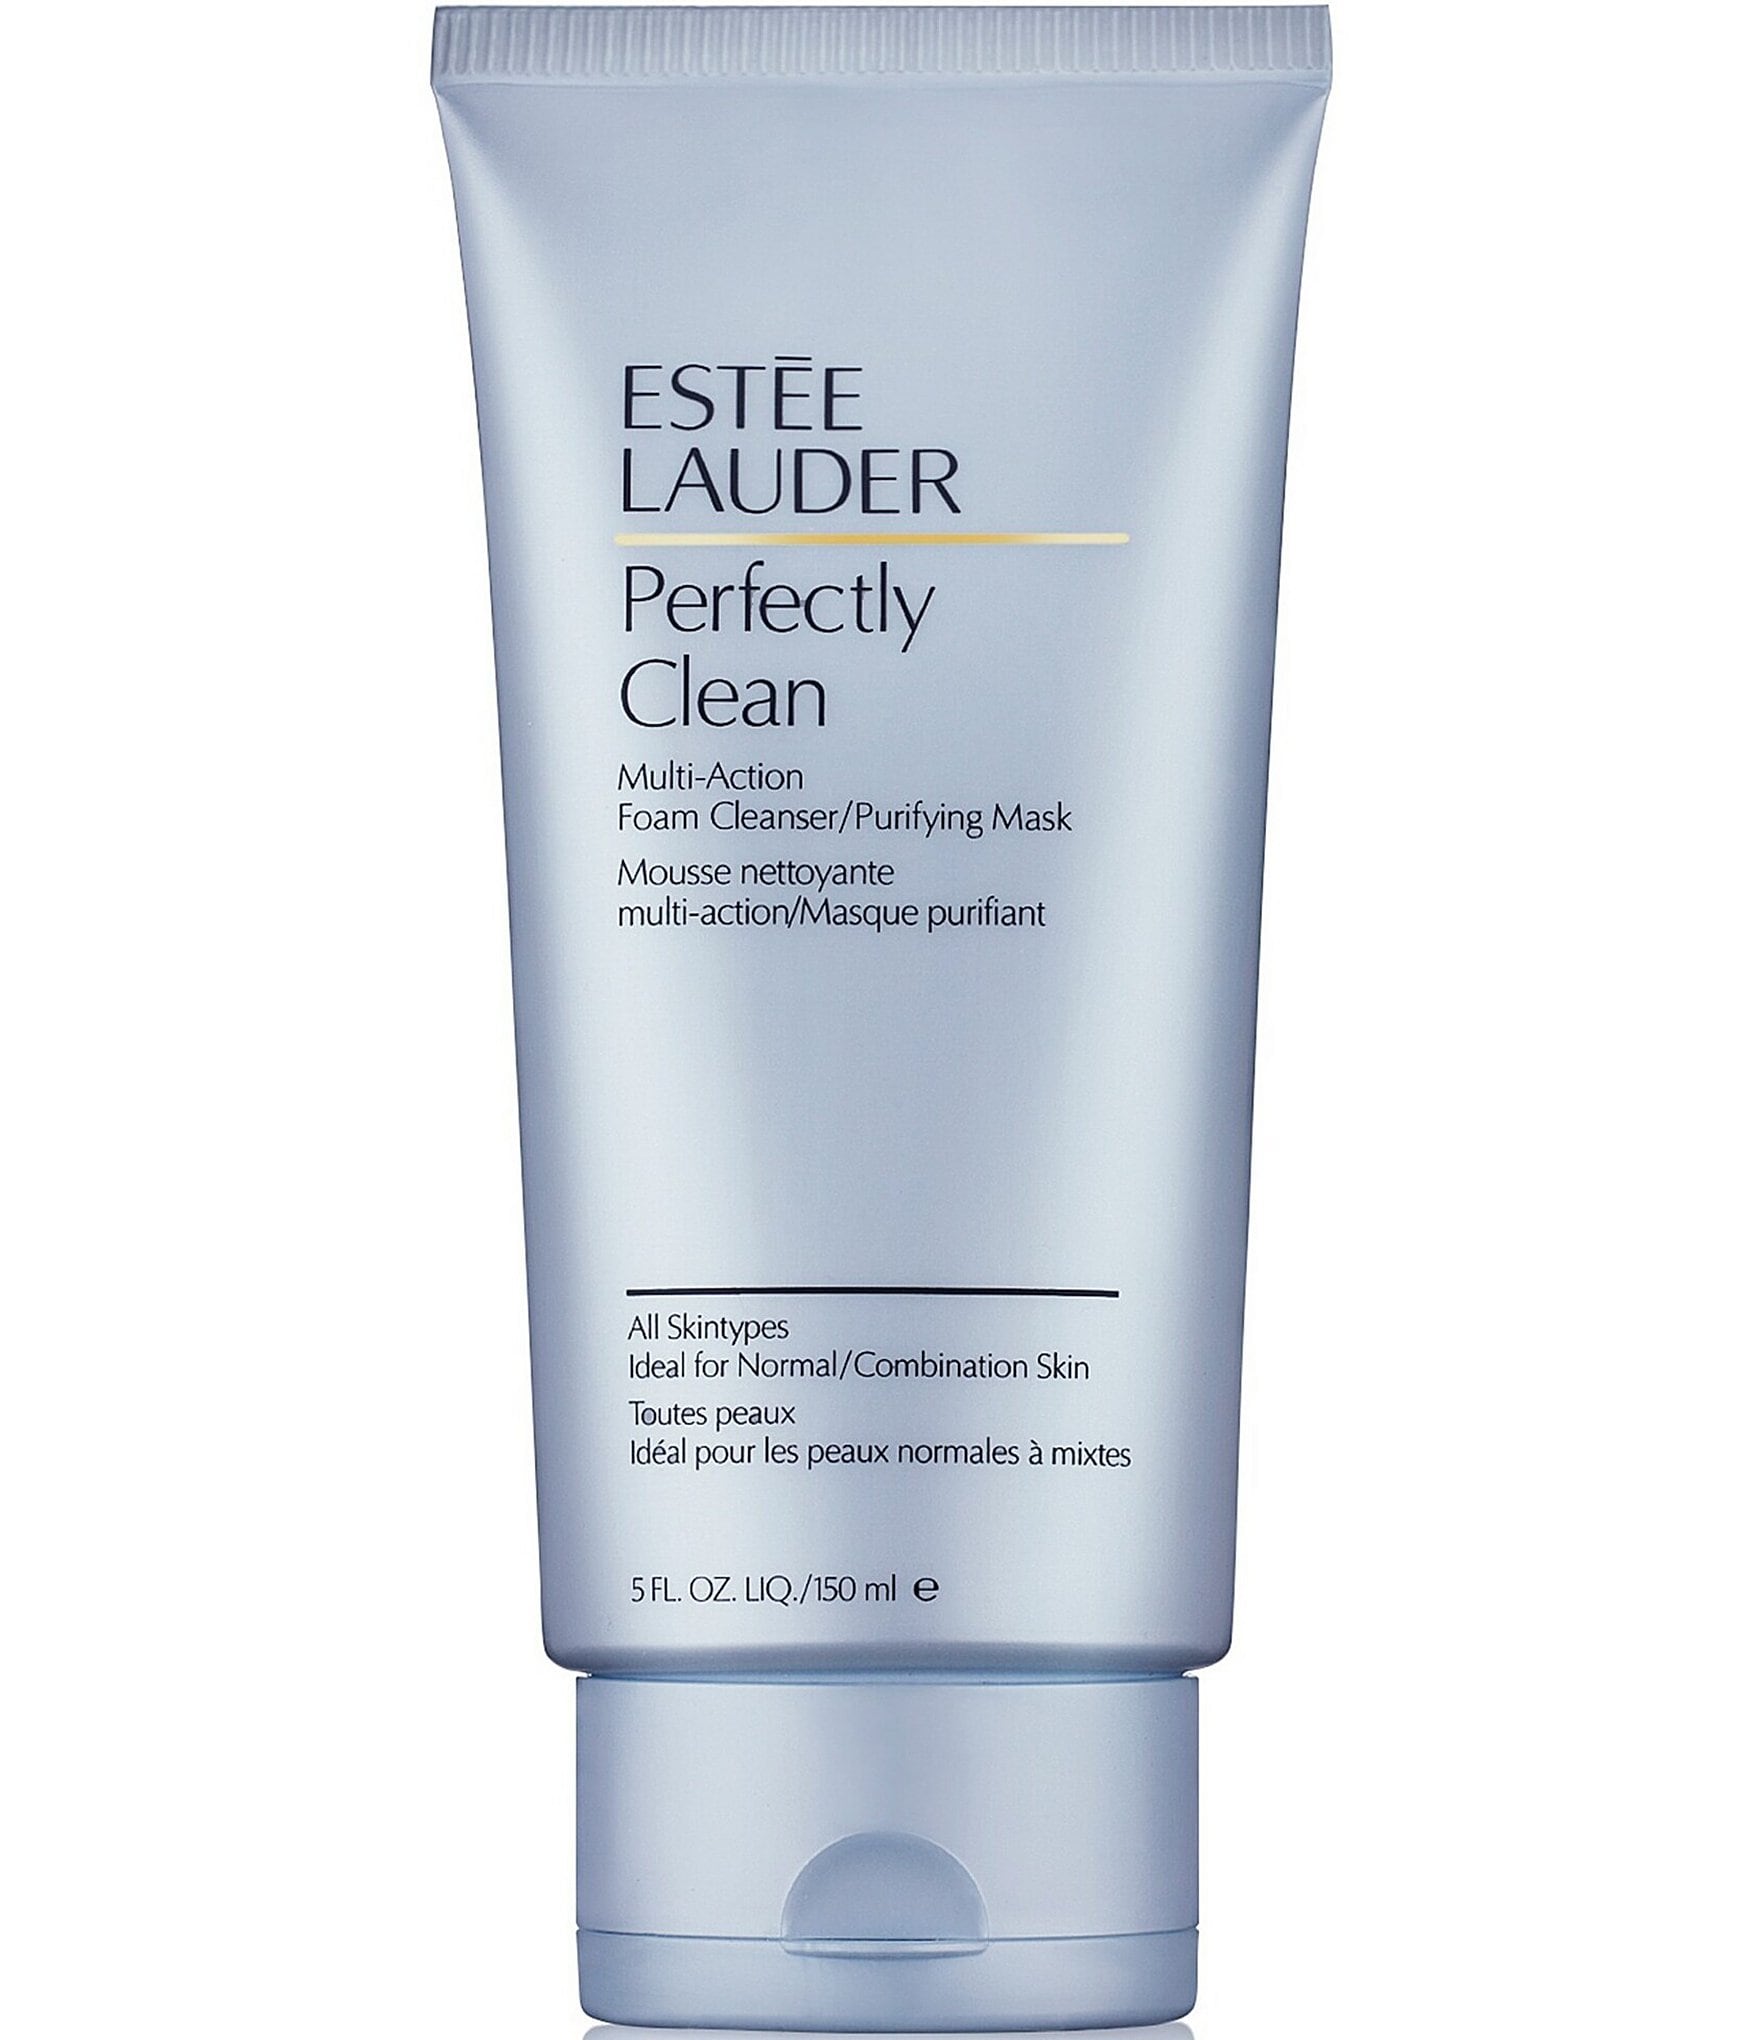 Estee Lauder Clean Multi-Action Foam Cleanser/Purifying Mask Treatment | Dillard's